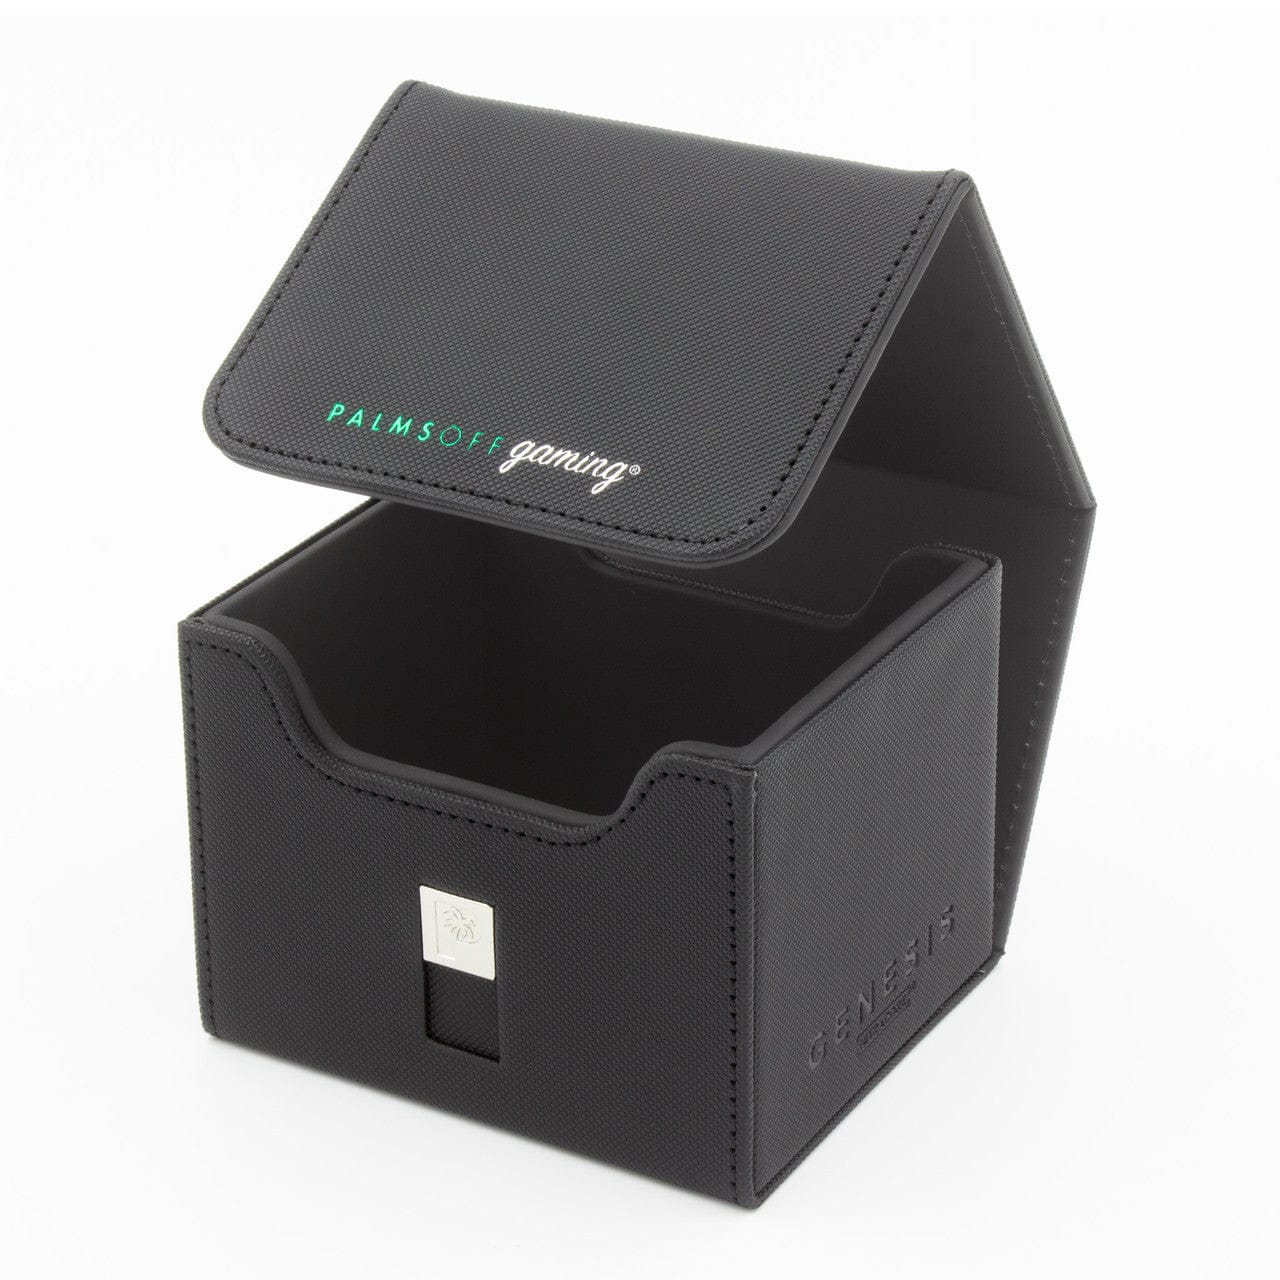 Genesis Deck Box - Black - THE CARD SPOT PTY LTD.ProtectionPALMS OFF GAMING